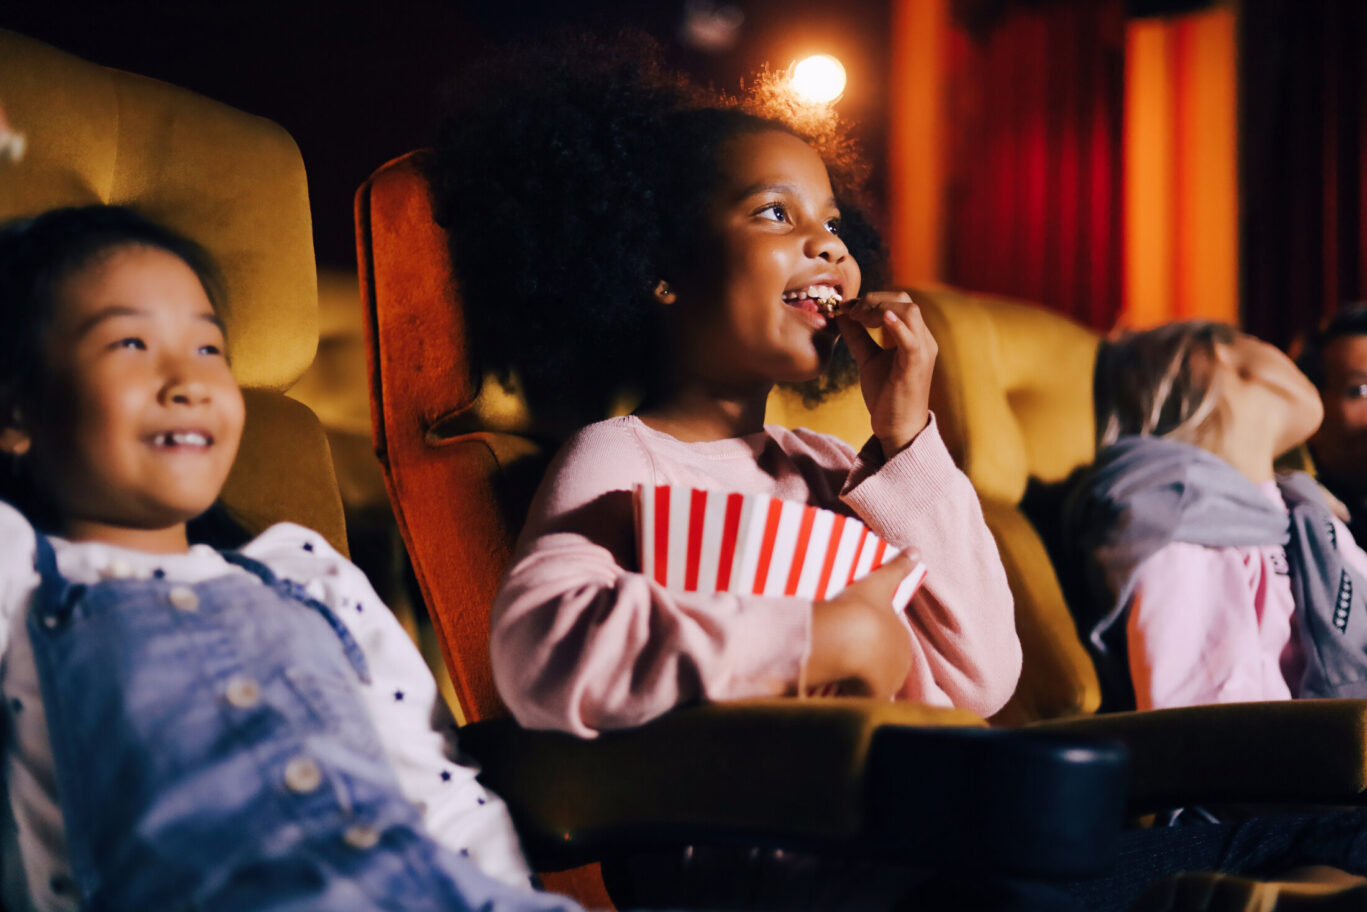 Kids enjoying popcorn and movie at the cinema